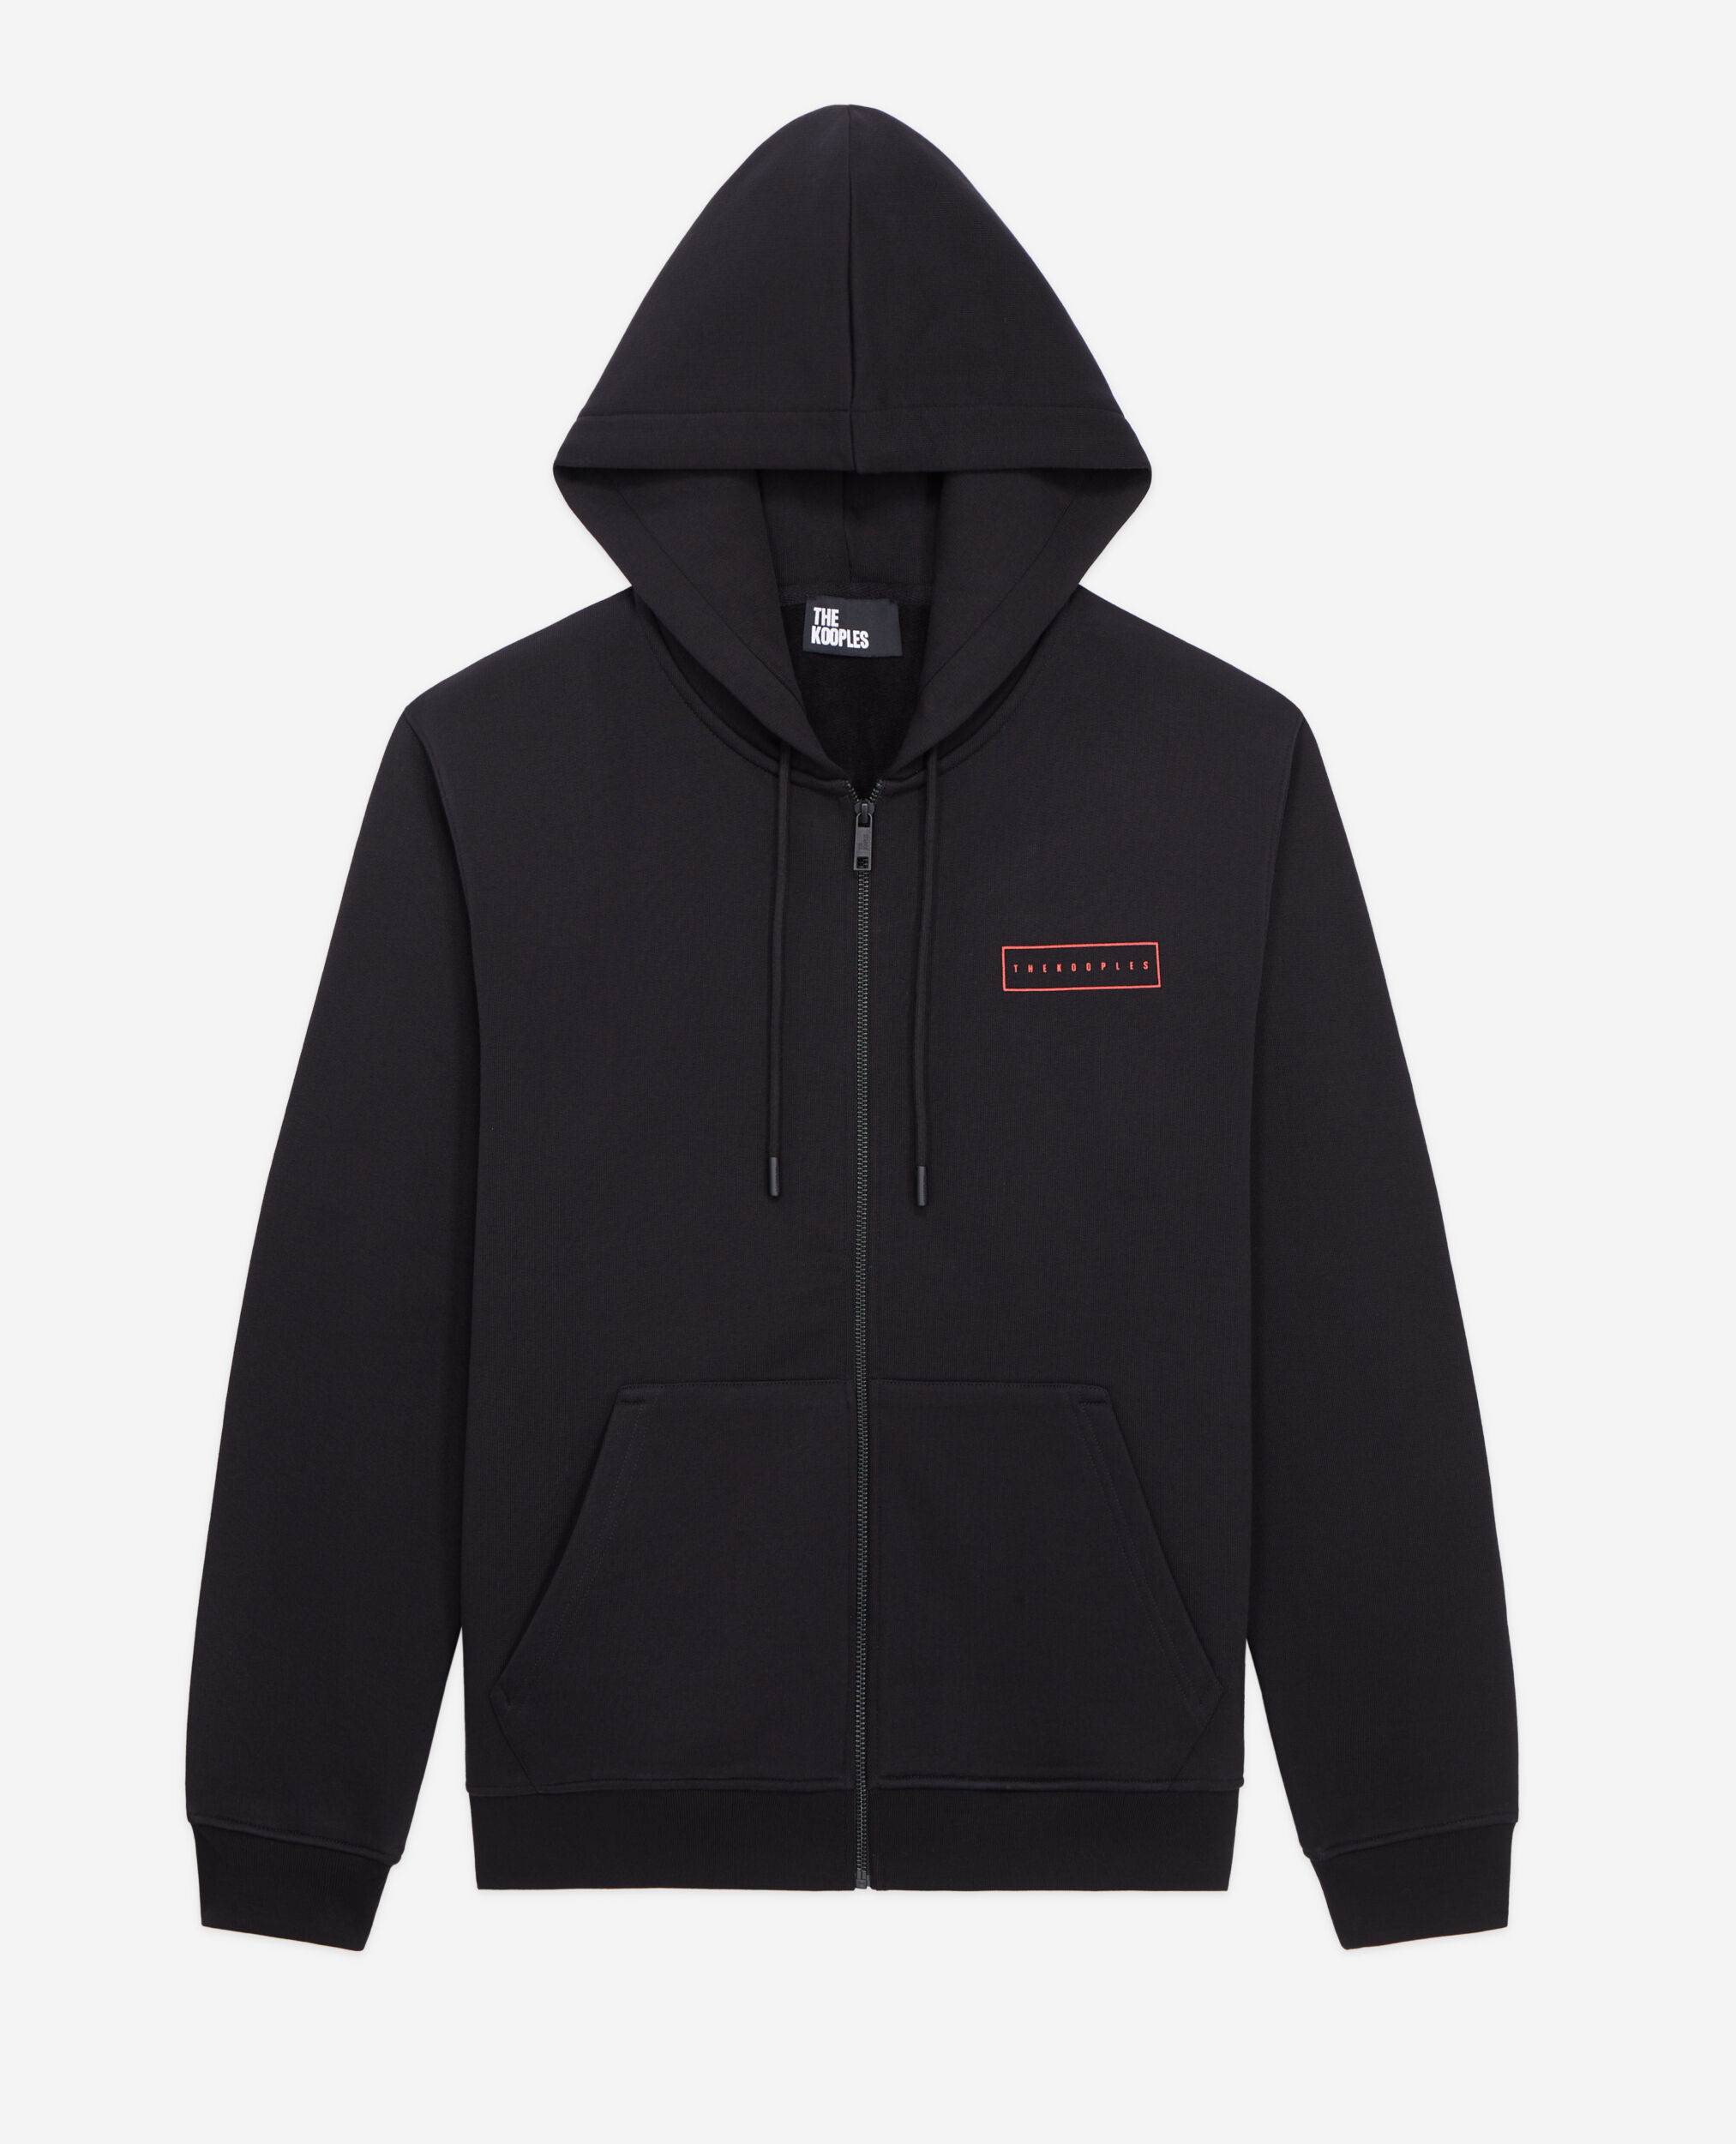 Black hoodie with X Rated serigraphy, BLACK, hi-res image number null